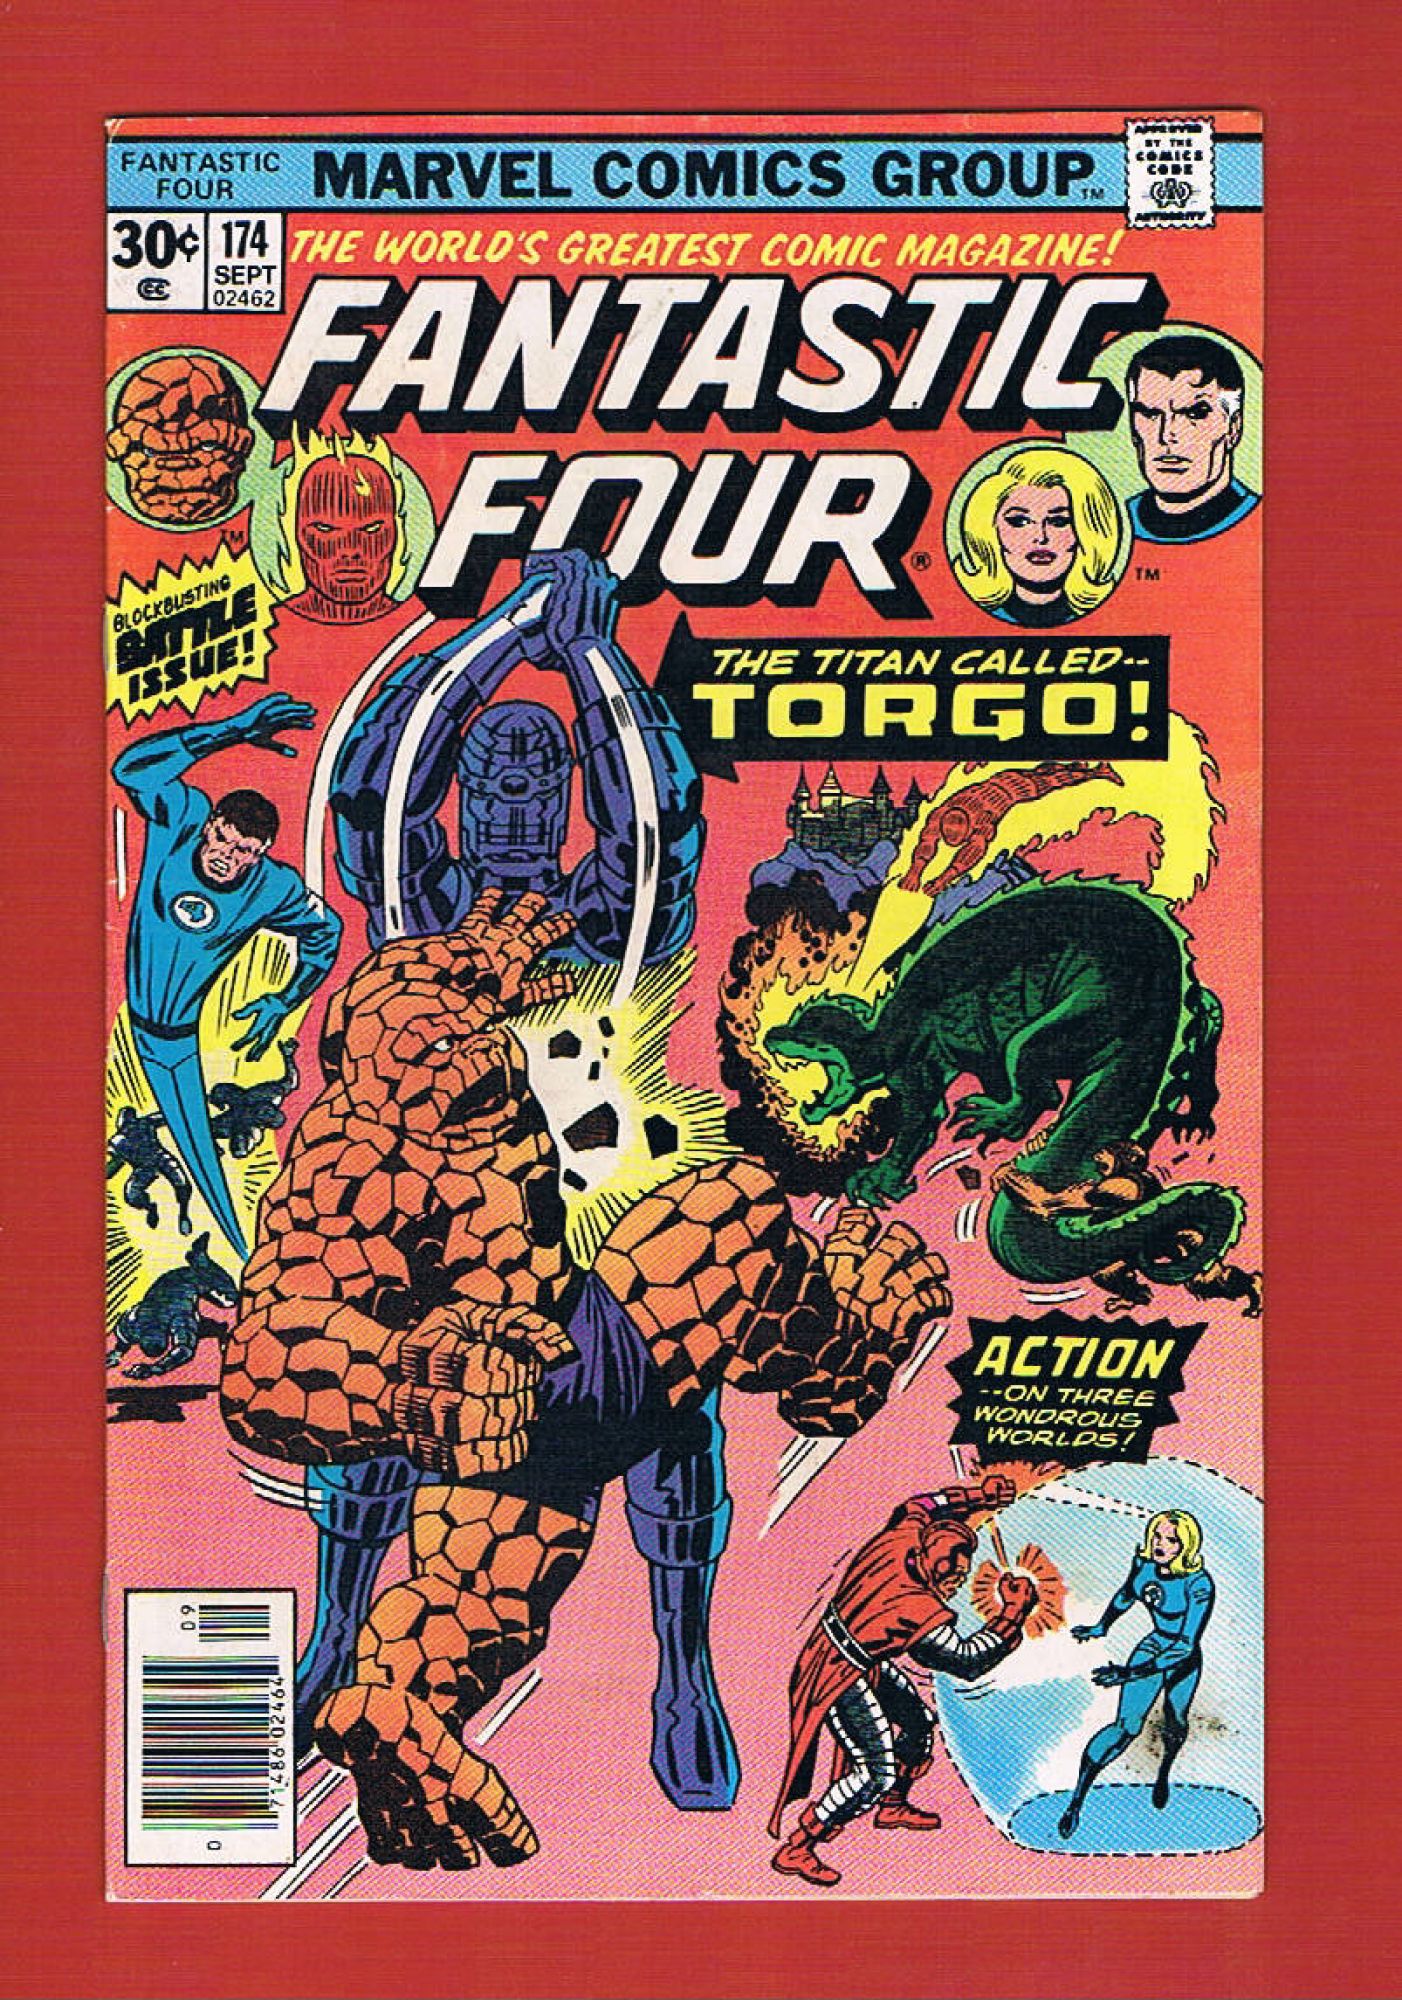 Fantastic Four #174, Sep 1976, 7.0 FN/VF